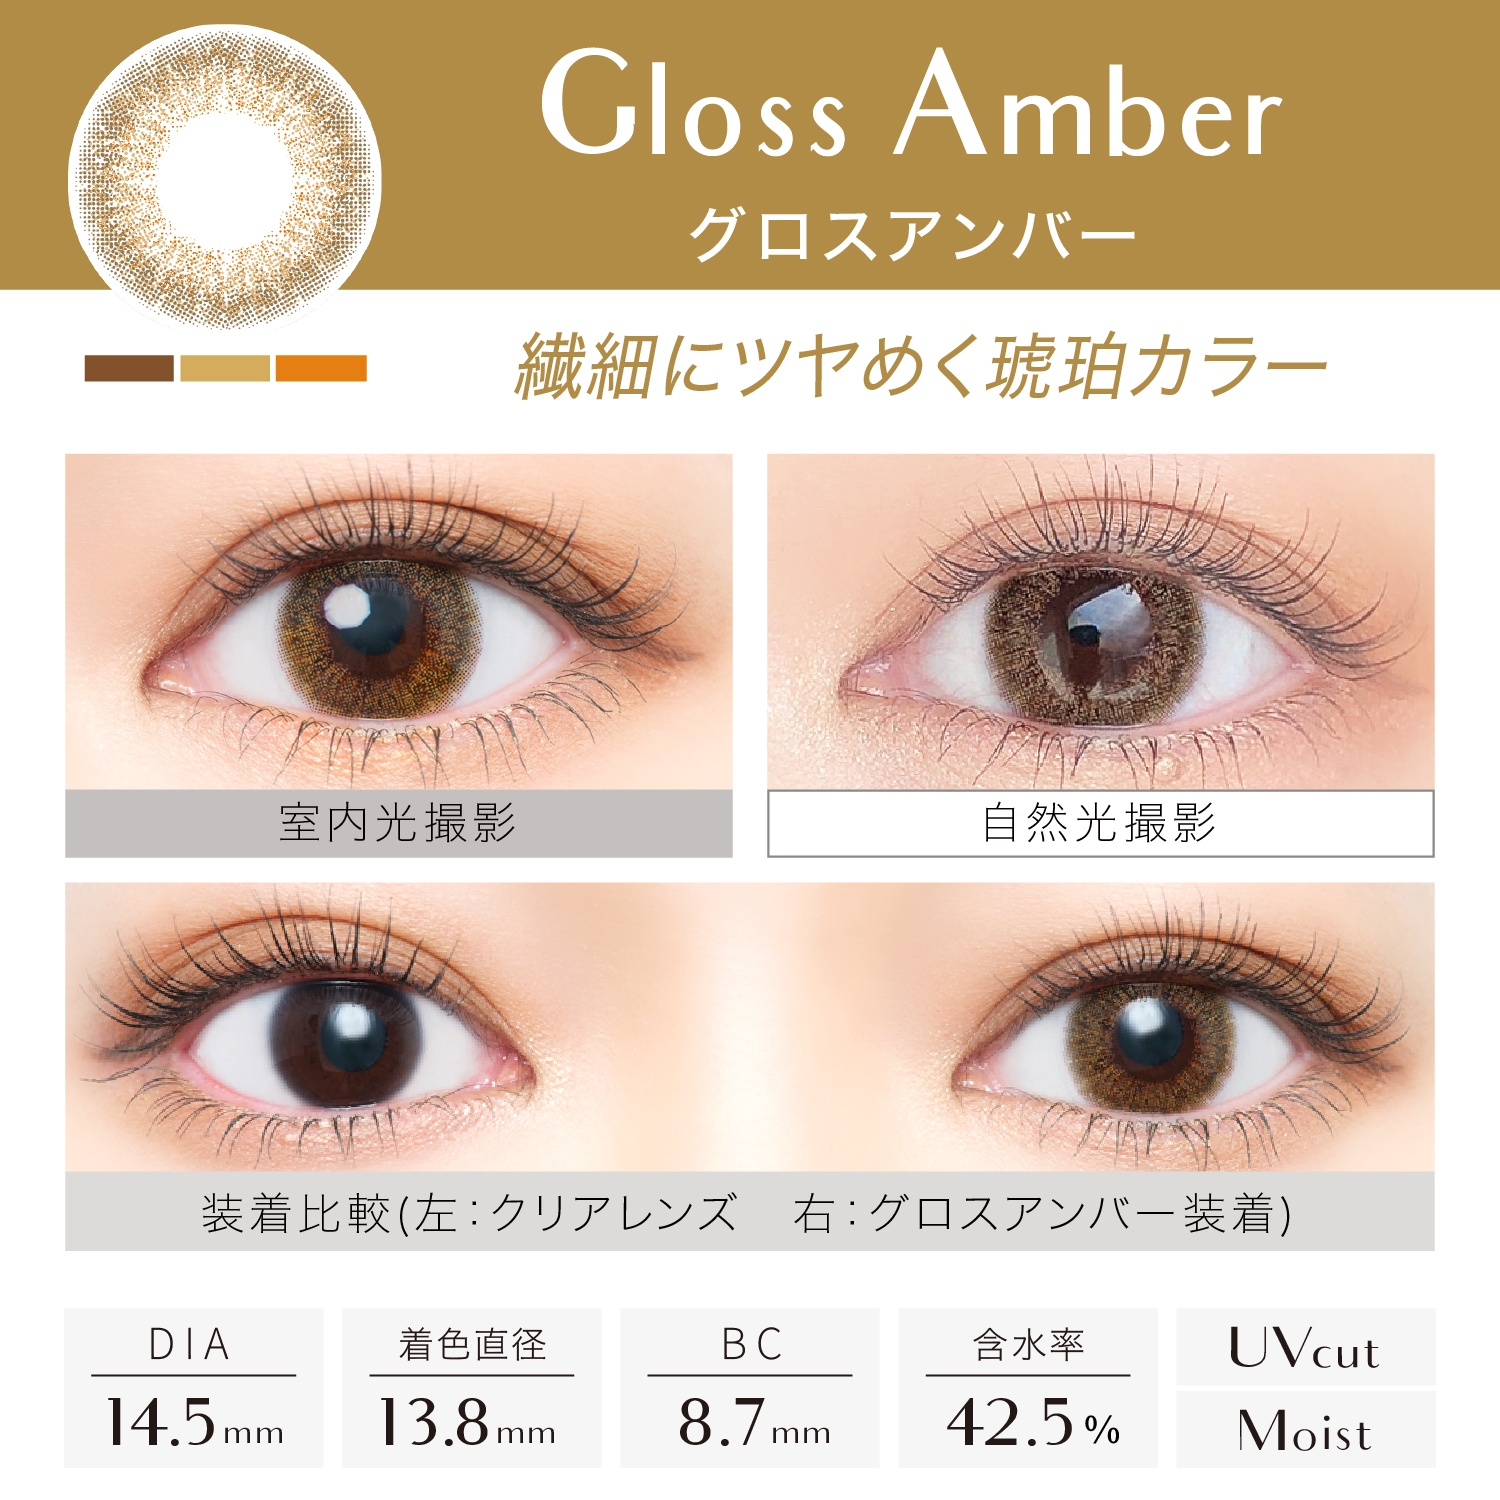 Gloss Amber